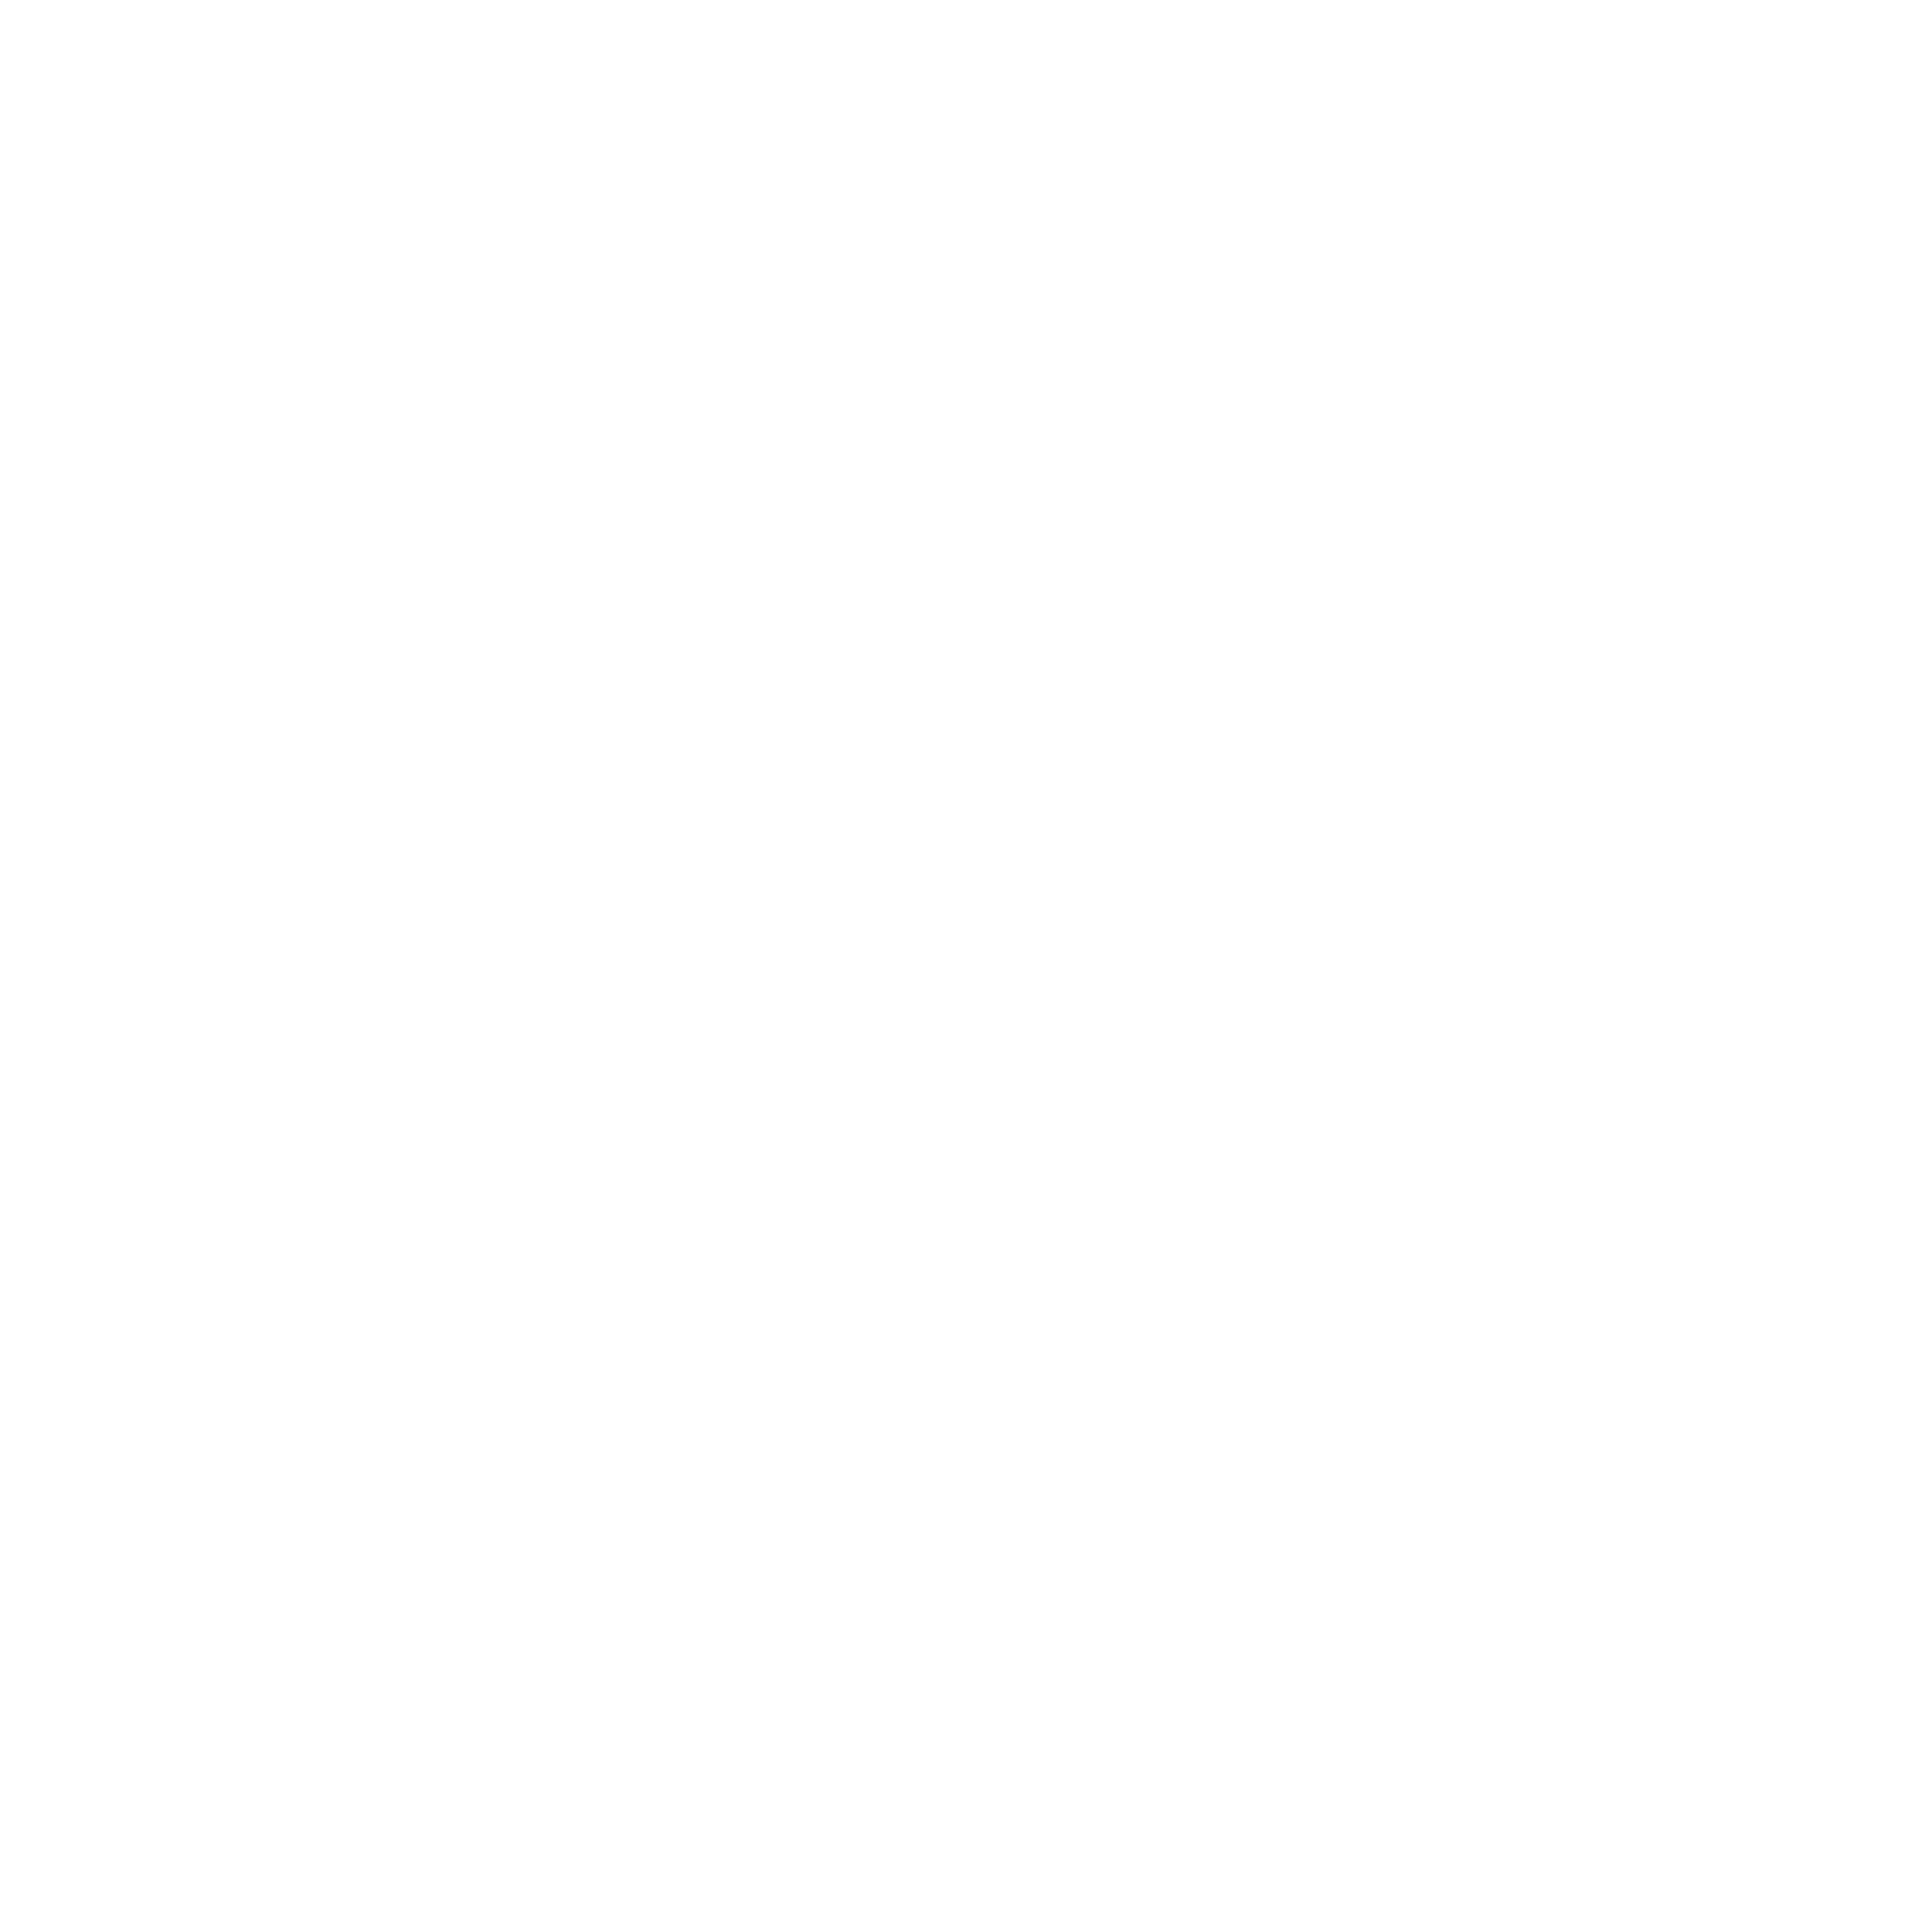 Ircam Amplify